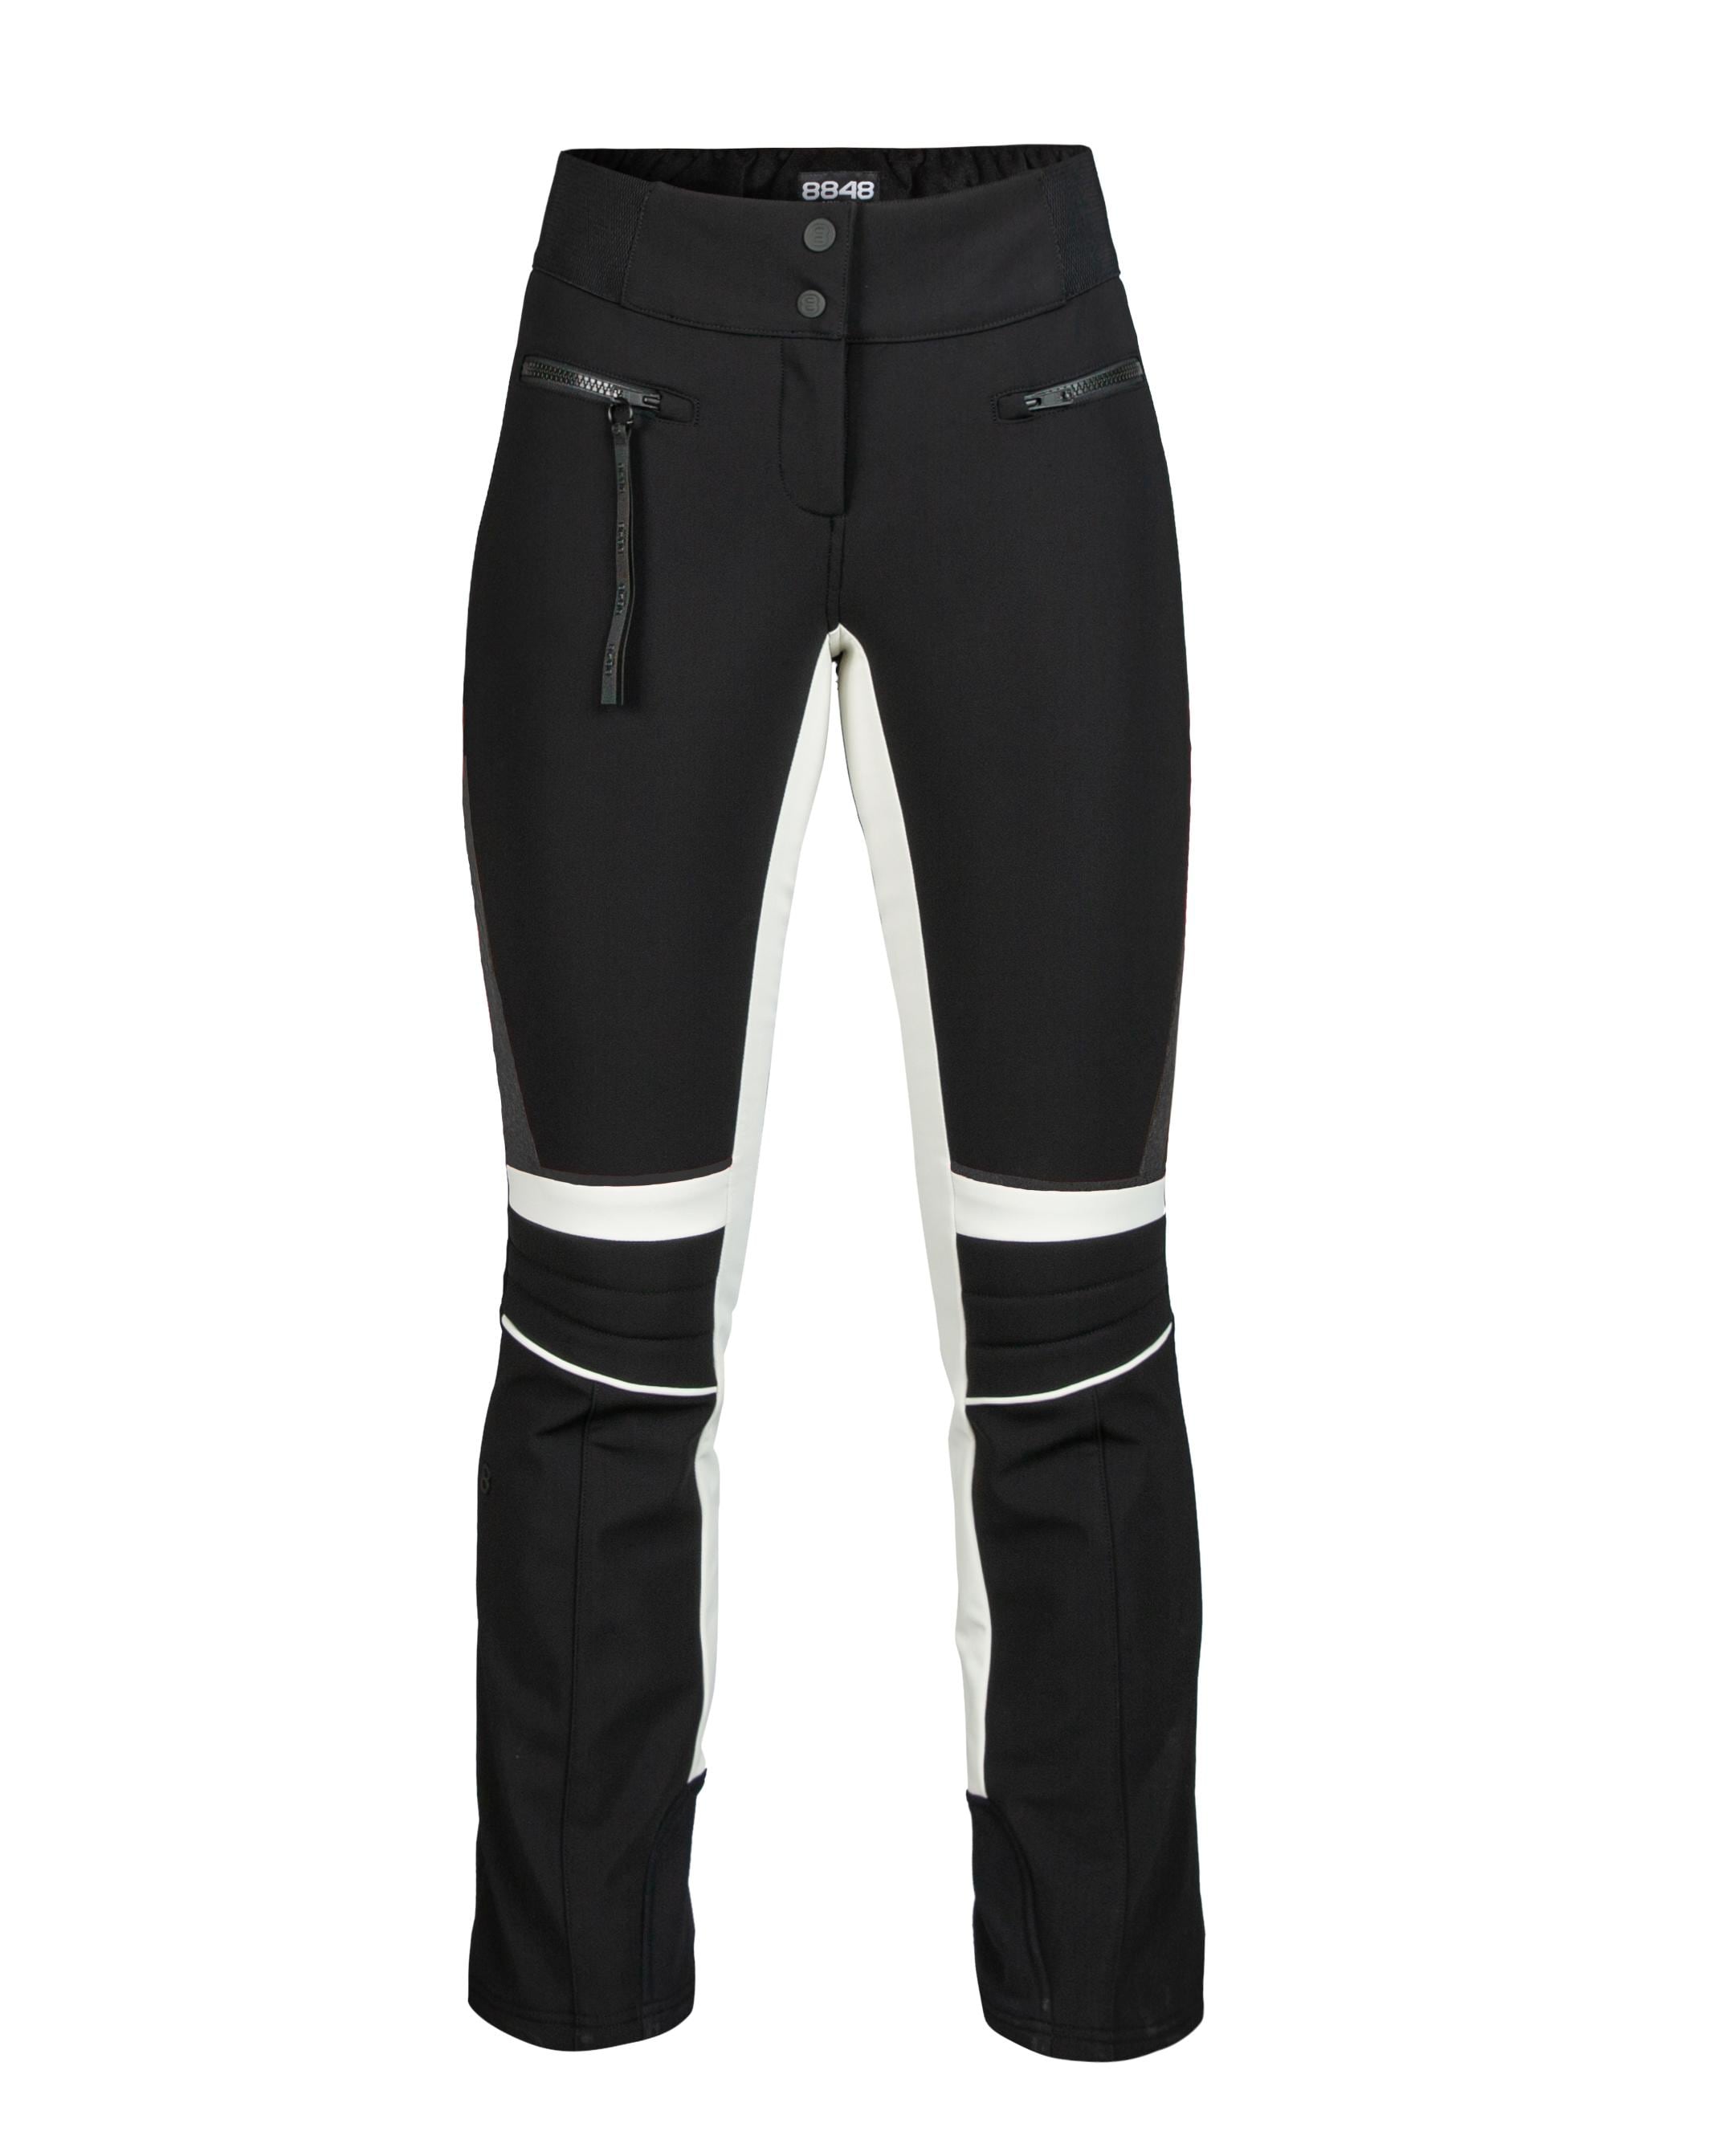 Adela W Pant Black/Grey - Black grey ski pant women